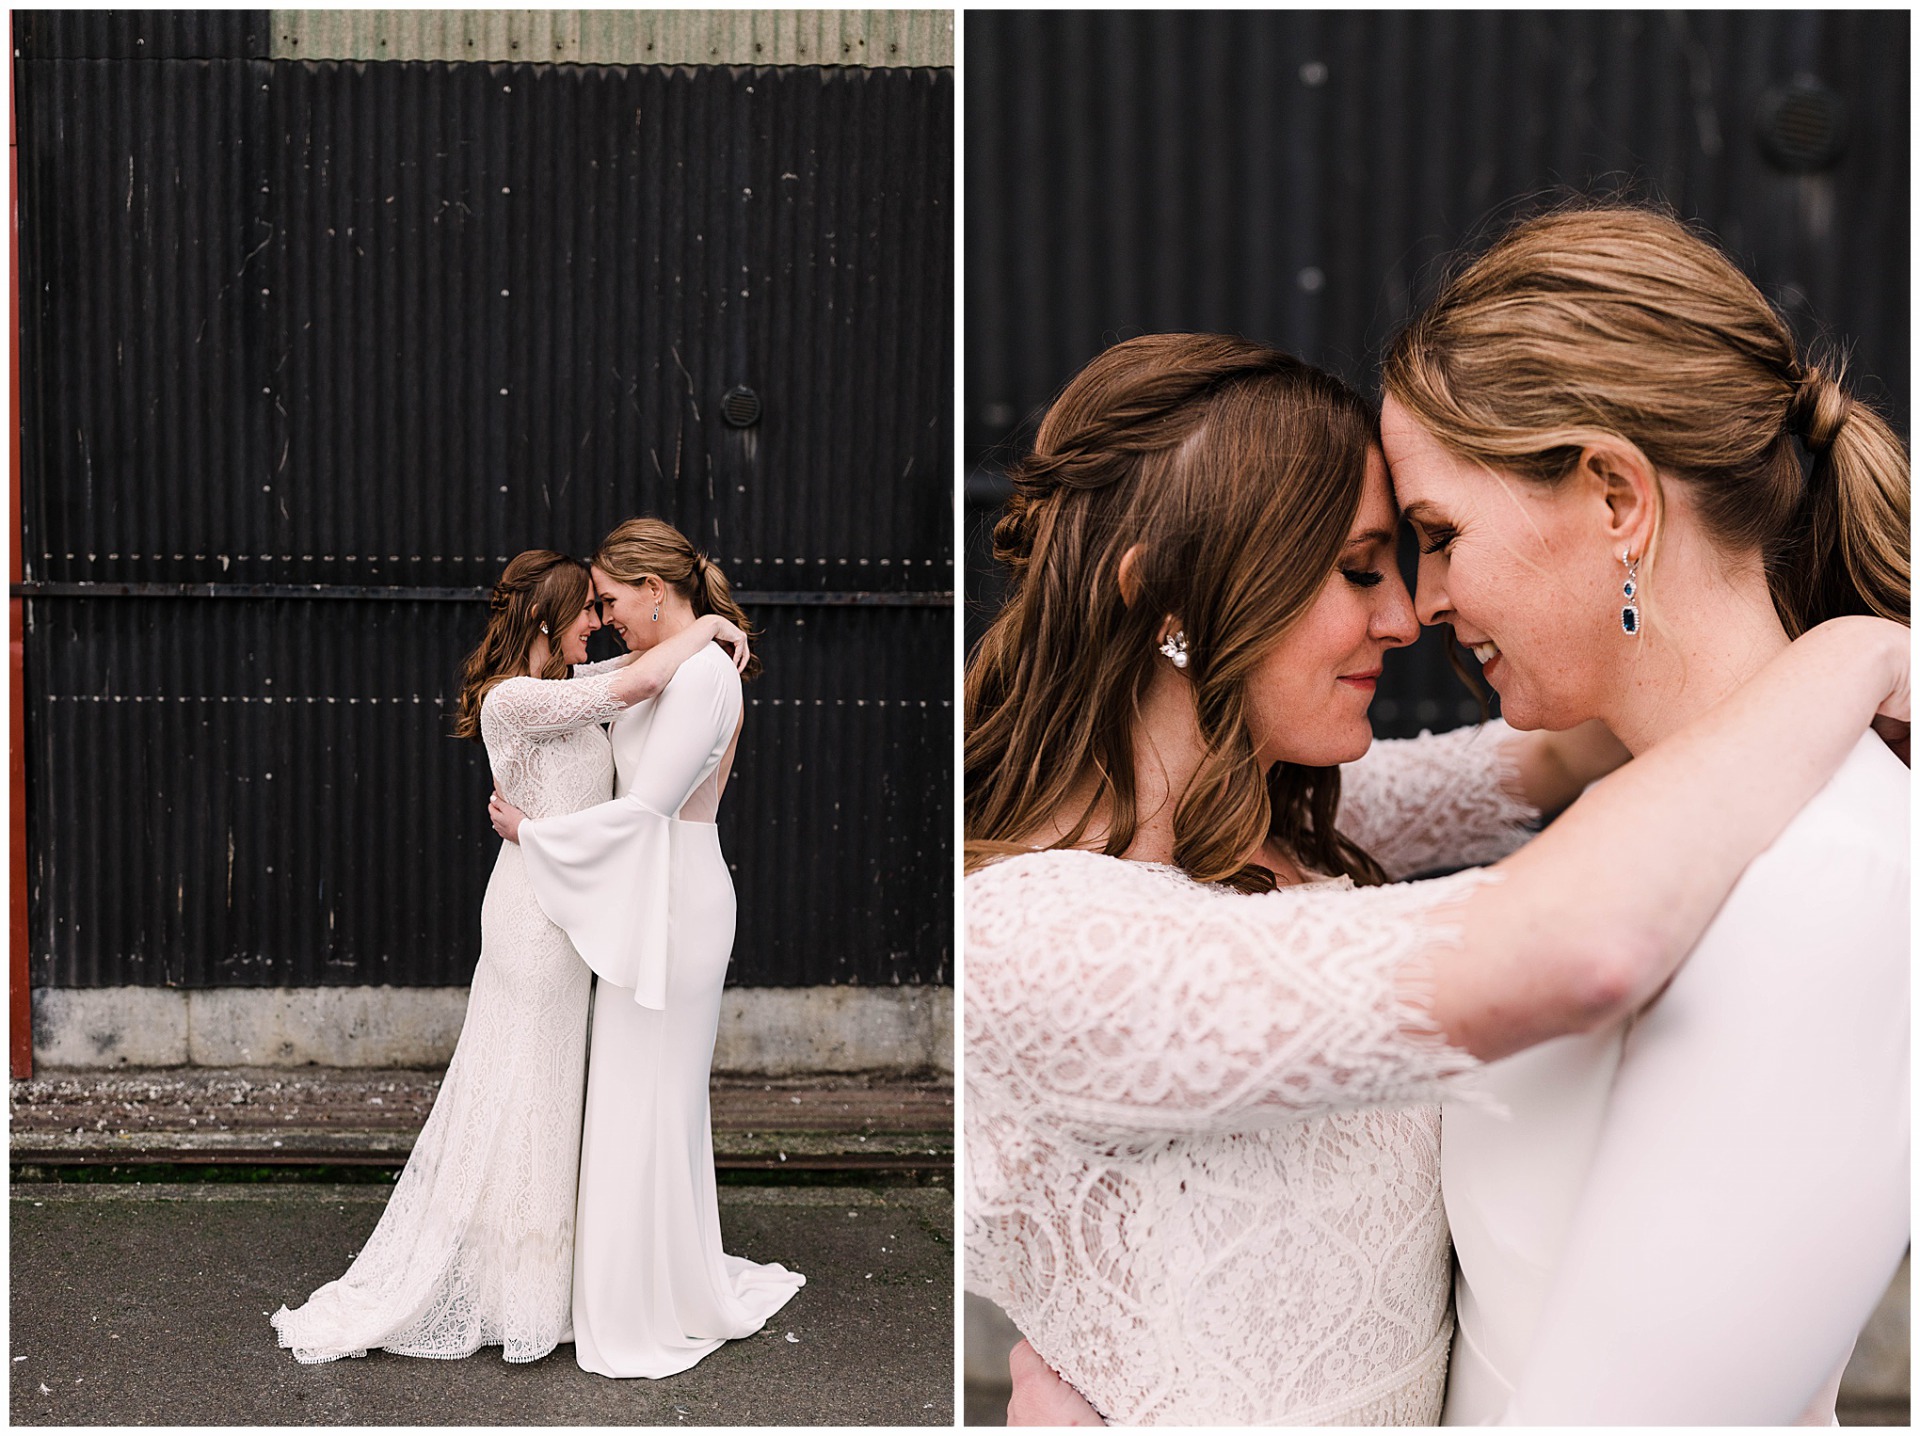 Erin + Ashley. A Metropolist Events Wedding. » Julia Kinnunen Photography